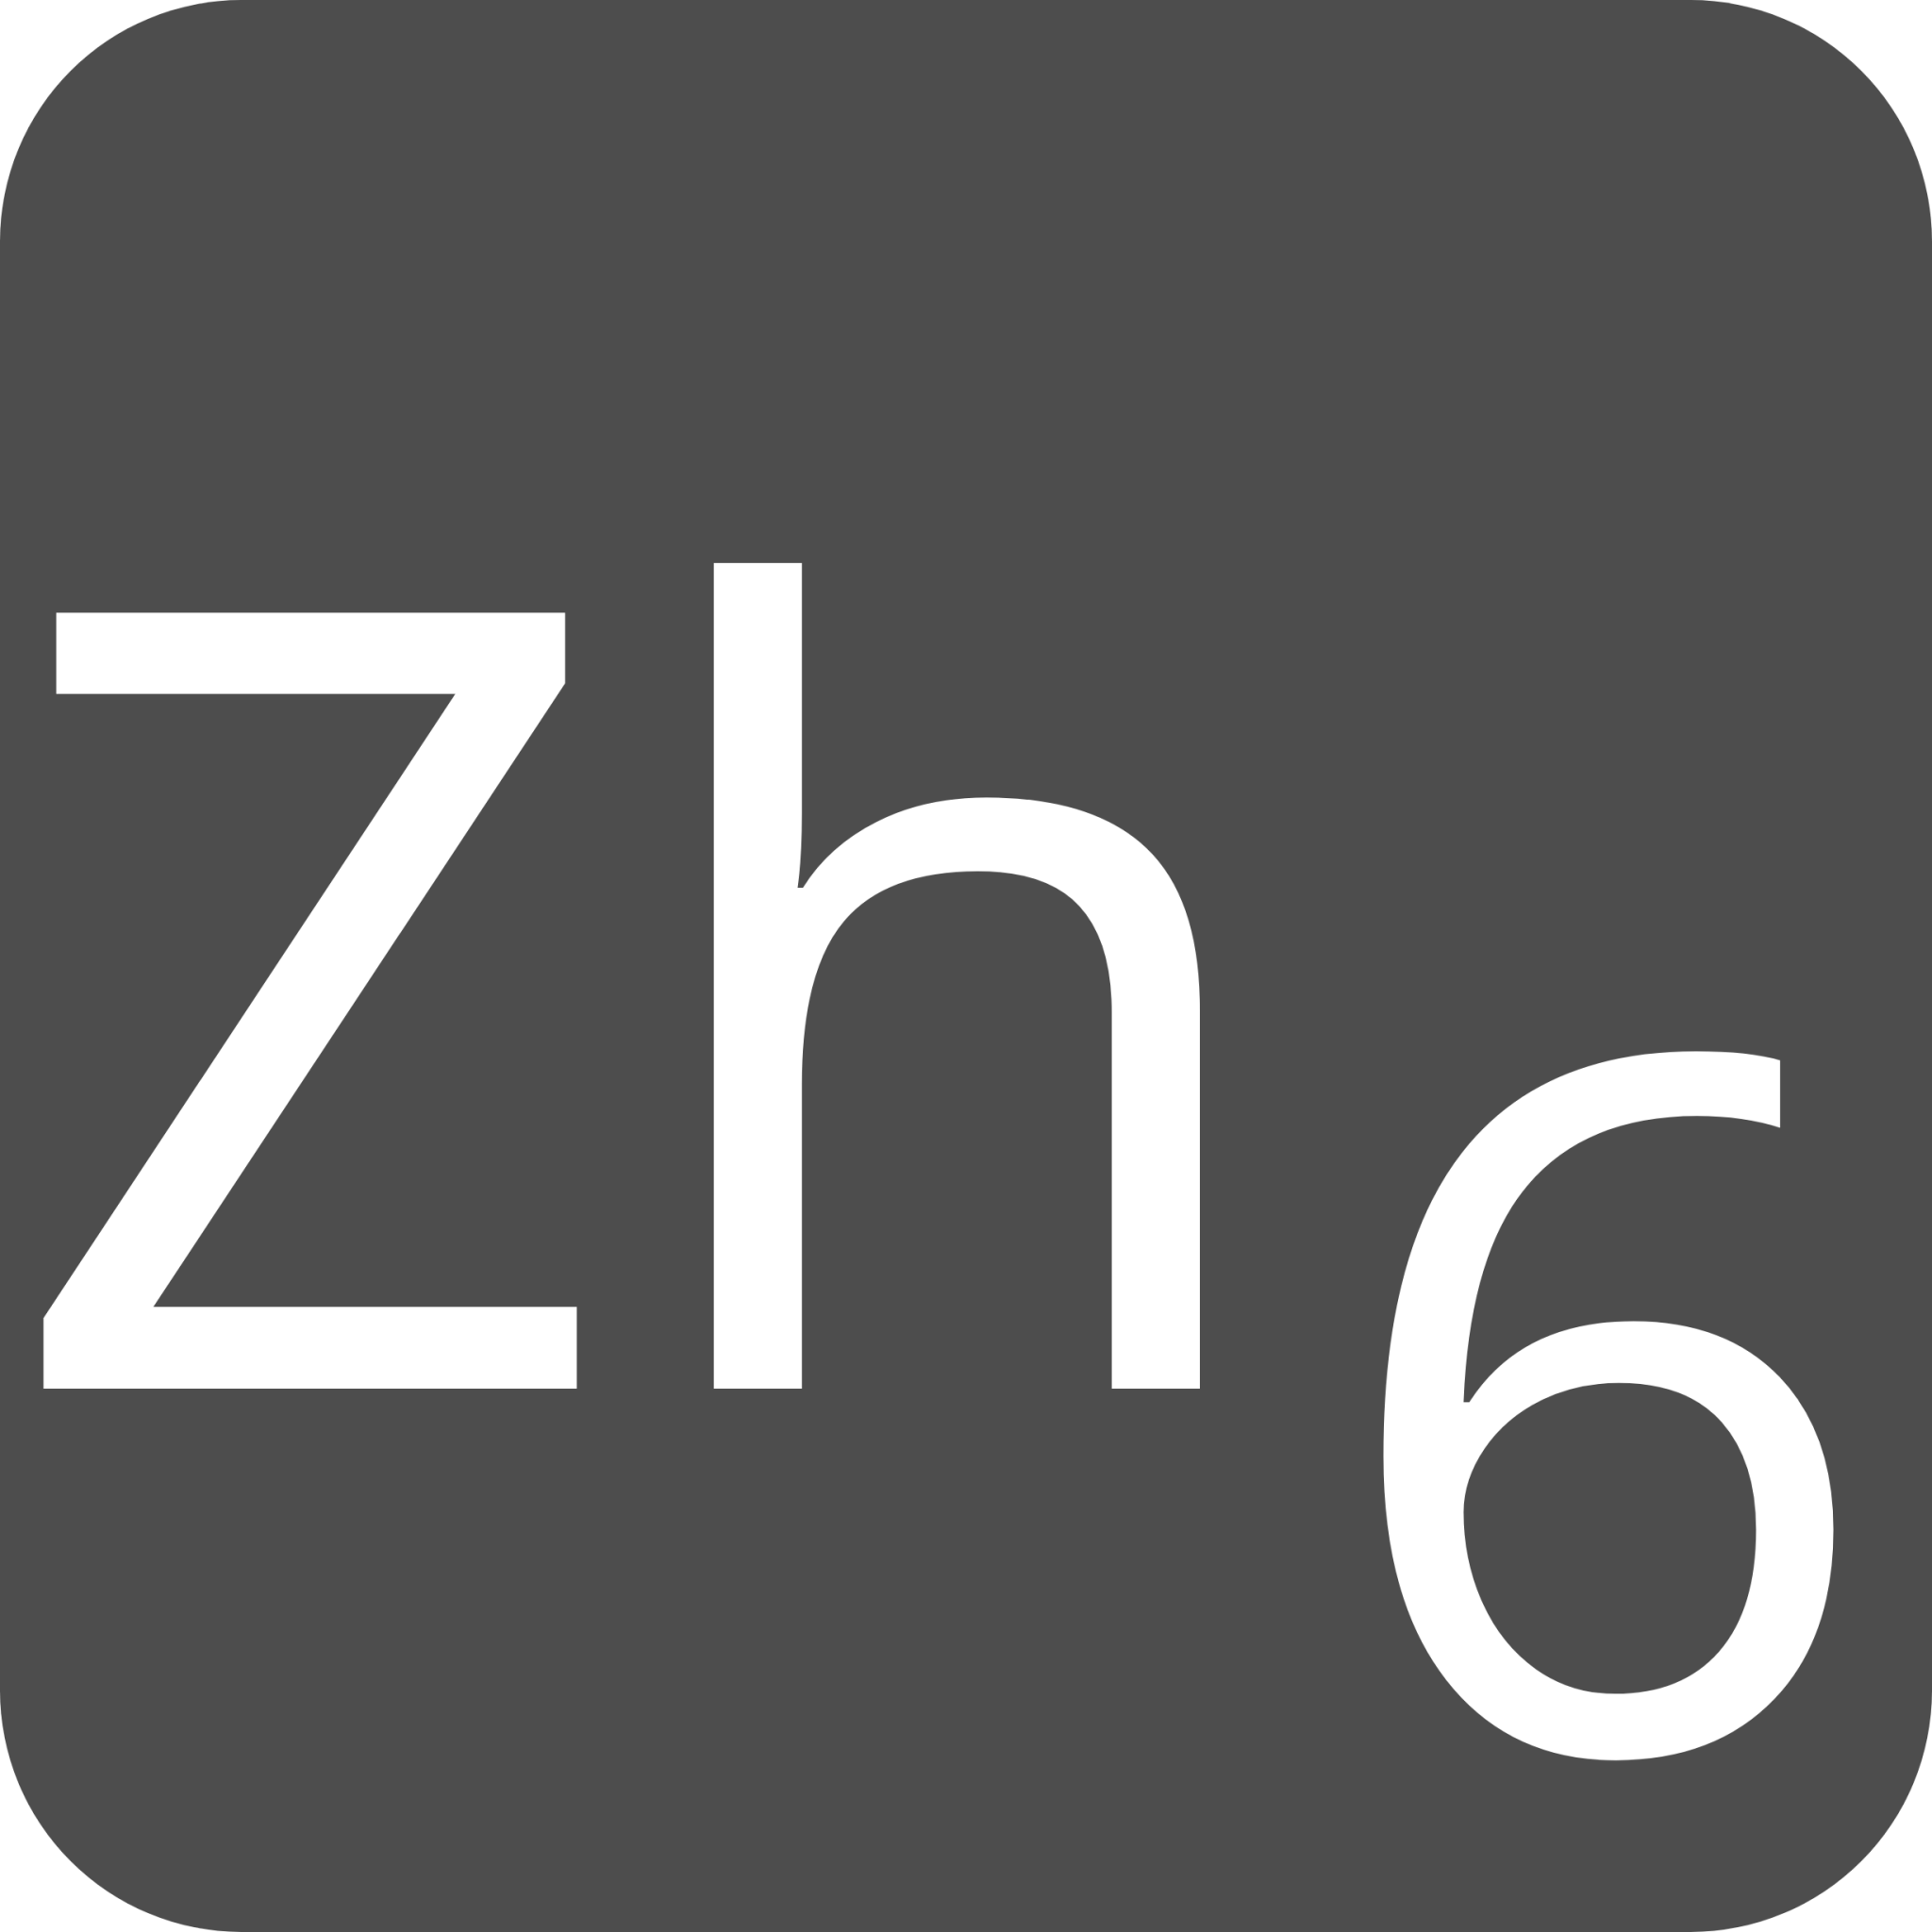 indicator keyboard Zh 6 icon